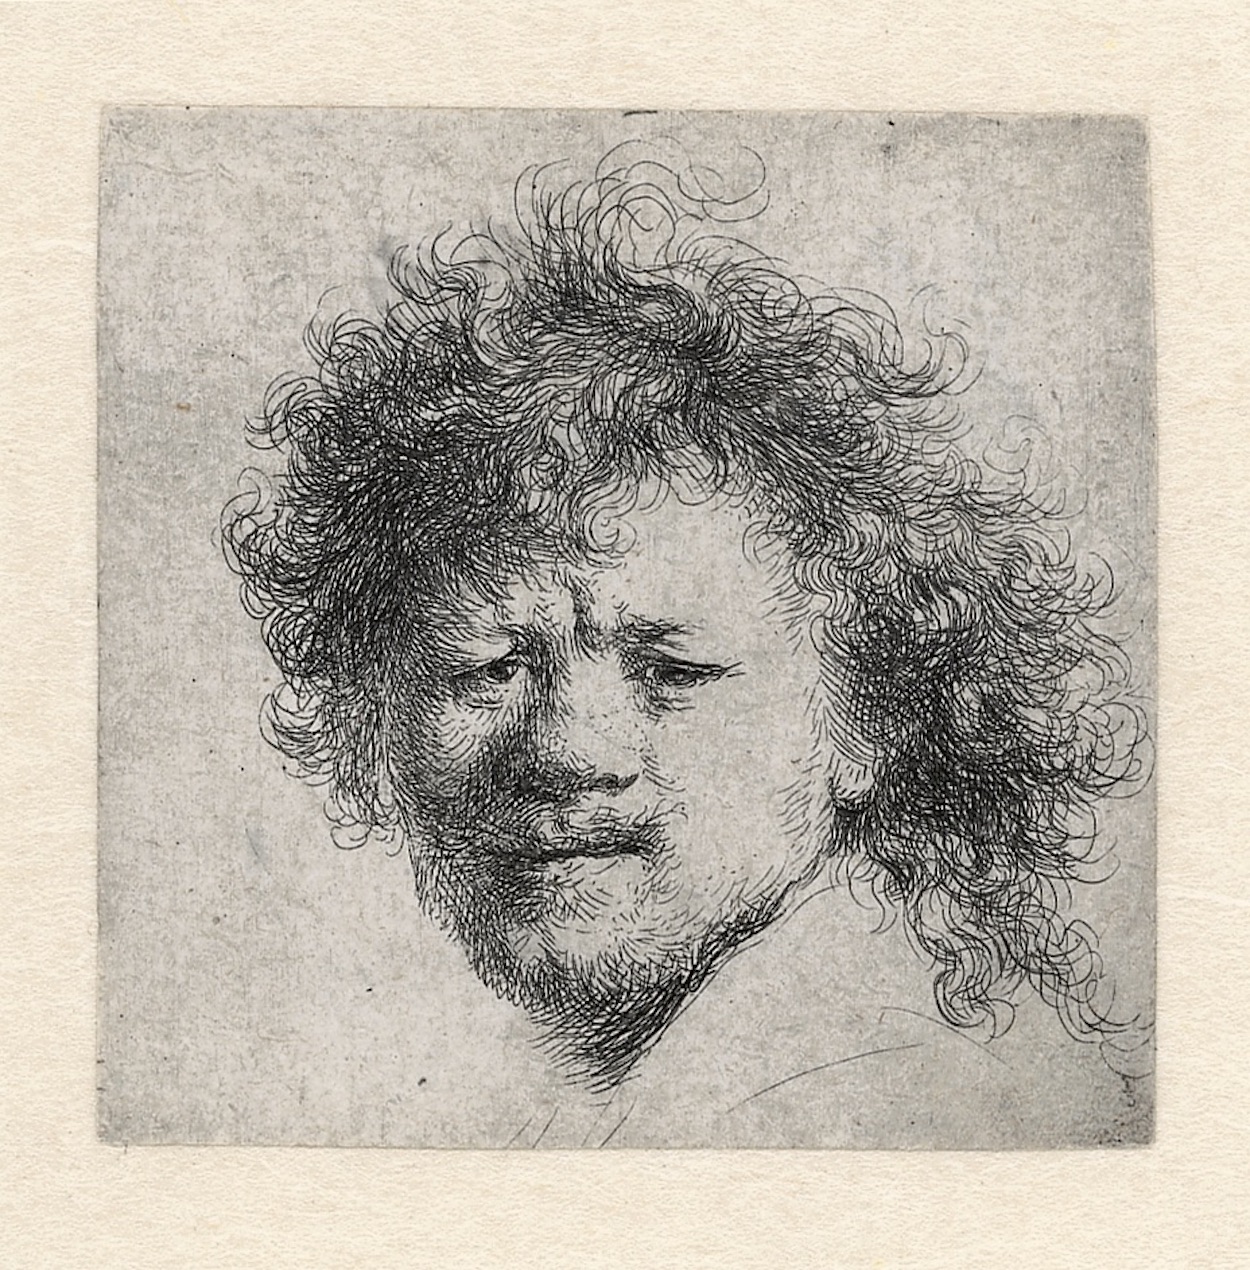 Self-Portrait with Bushy Hair by Rembrandt van Rijn - c. 1631 - 90 × 76 mm Rembrandthuis